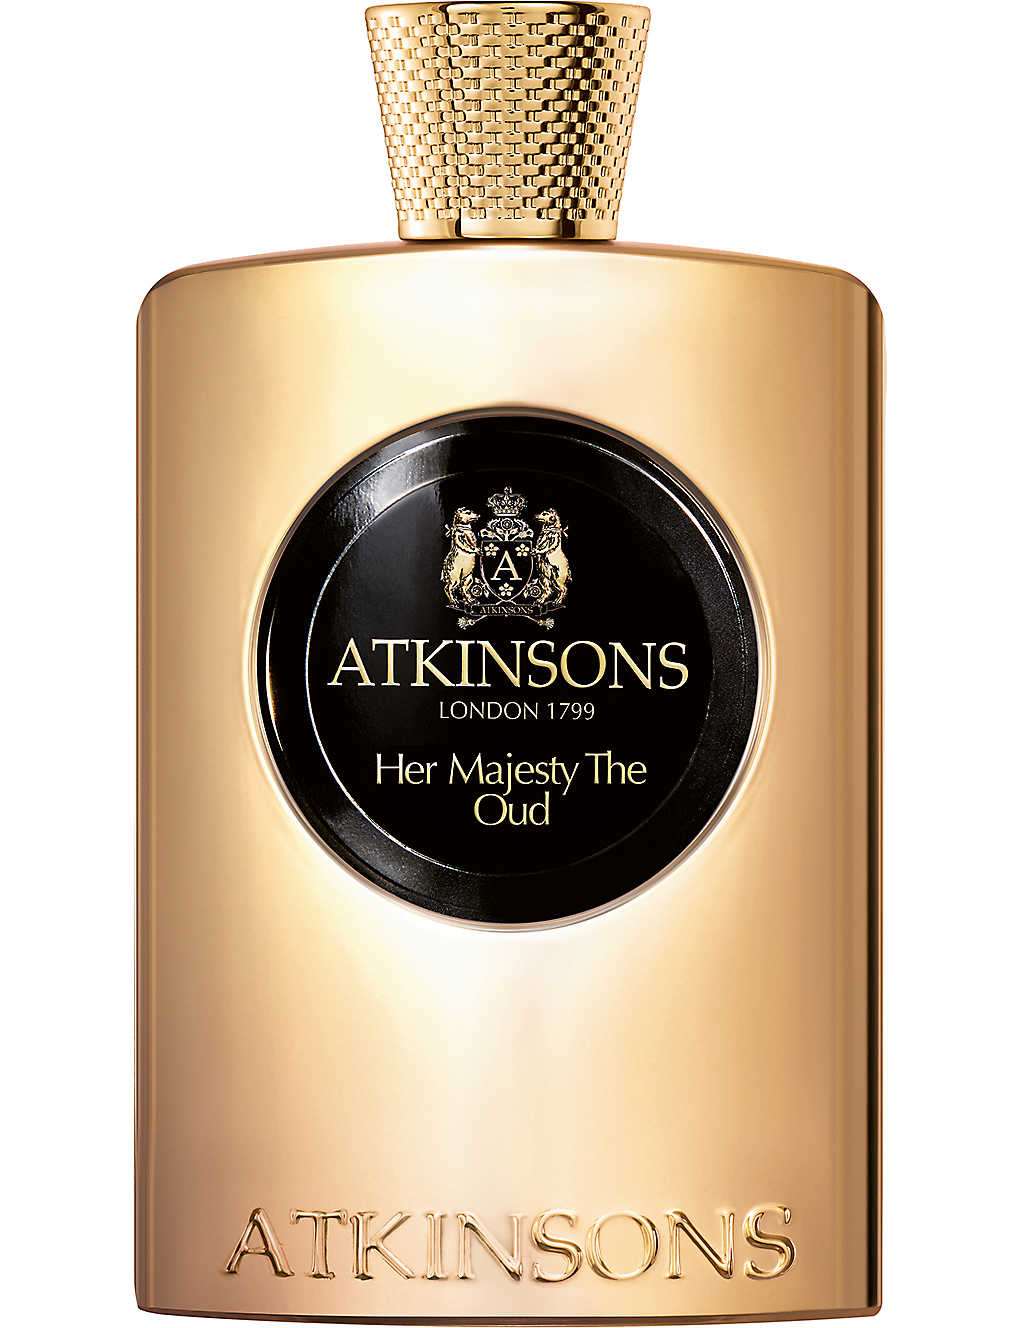 Atkinsons Her Majesty The Oud 100ml parfüm örnekleri dahil